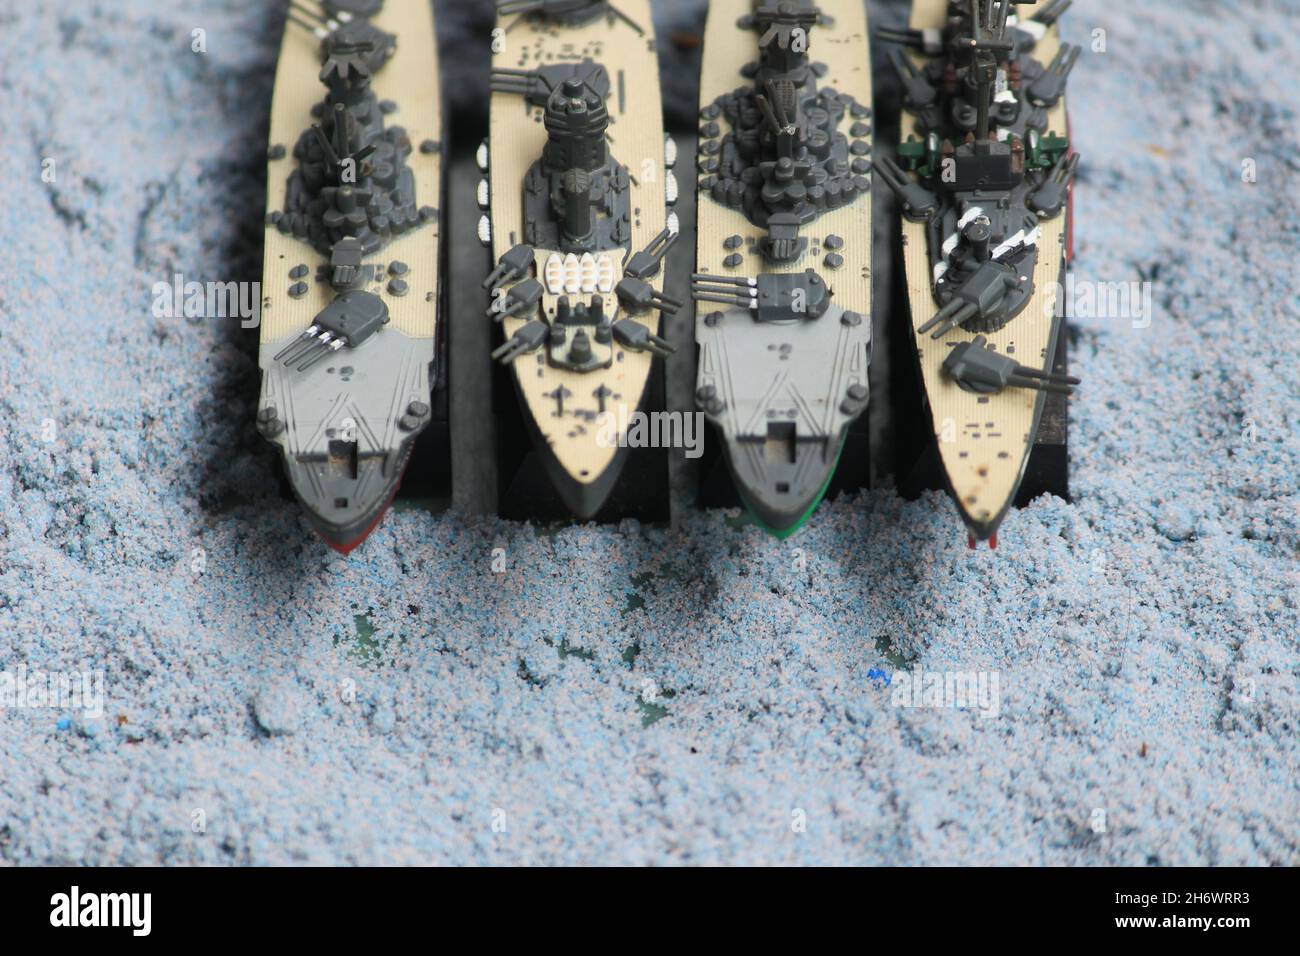 The lineup of miniature battleships consists of the enterprise carrier, the submarine, the battleship Musashi, the battleship Yamato Stock Photo